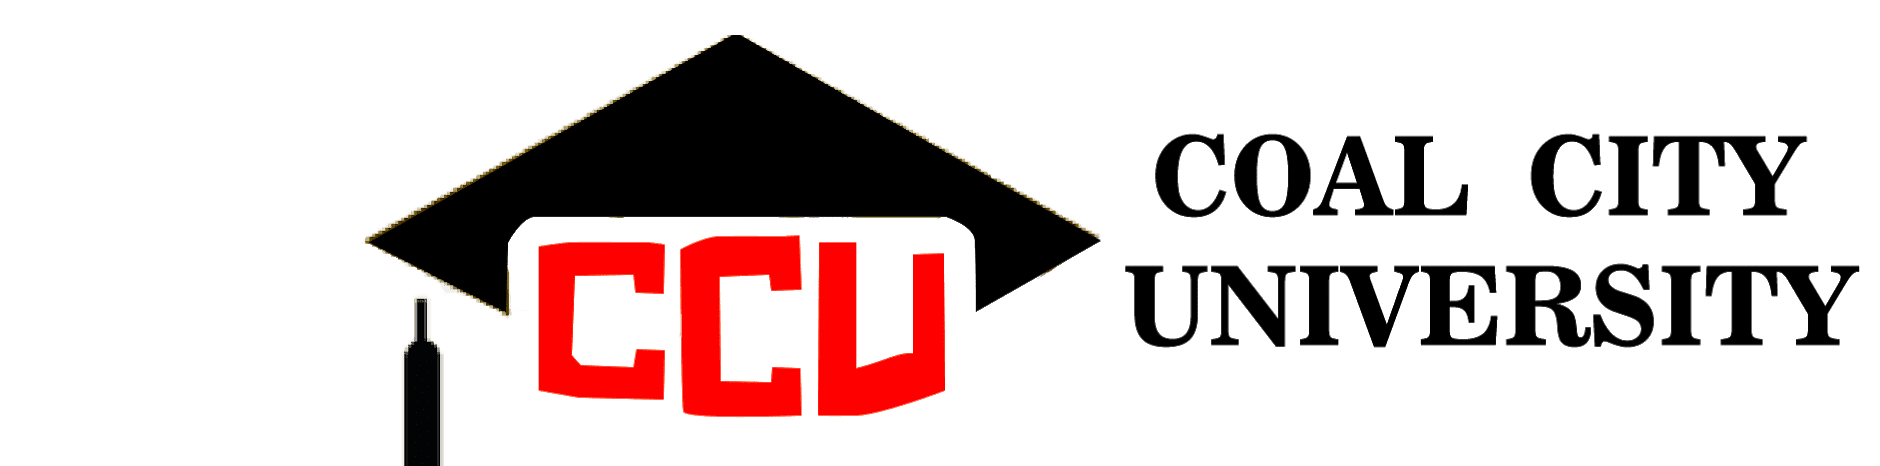 coal city university scholarship